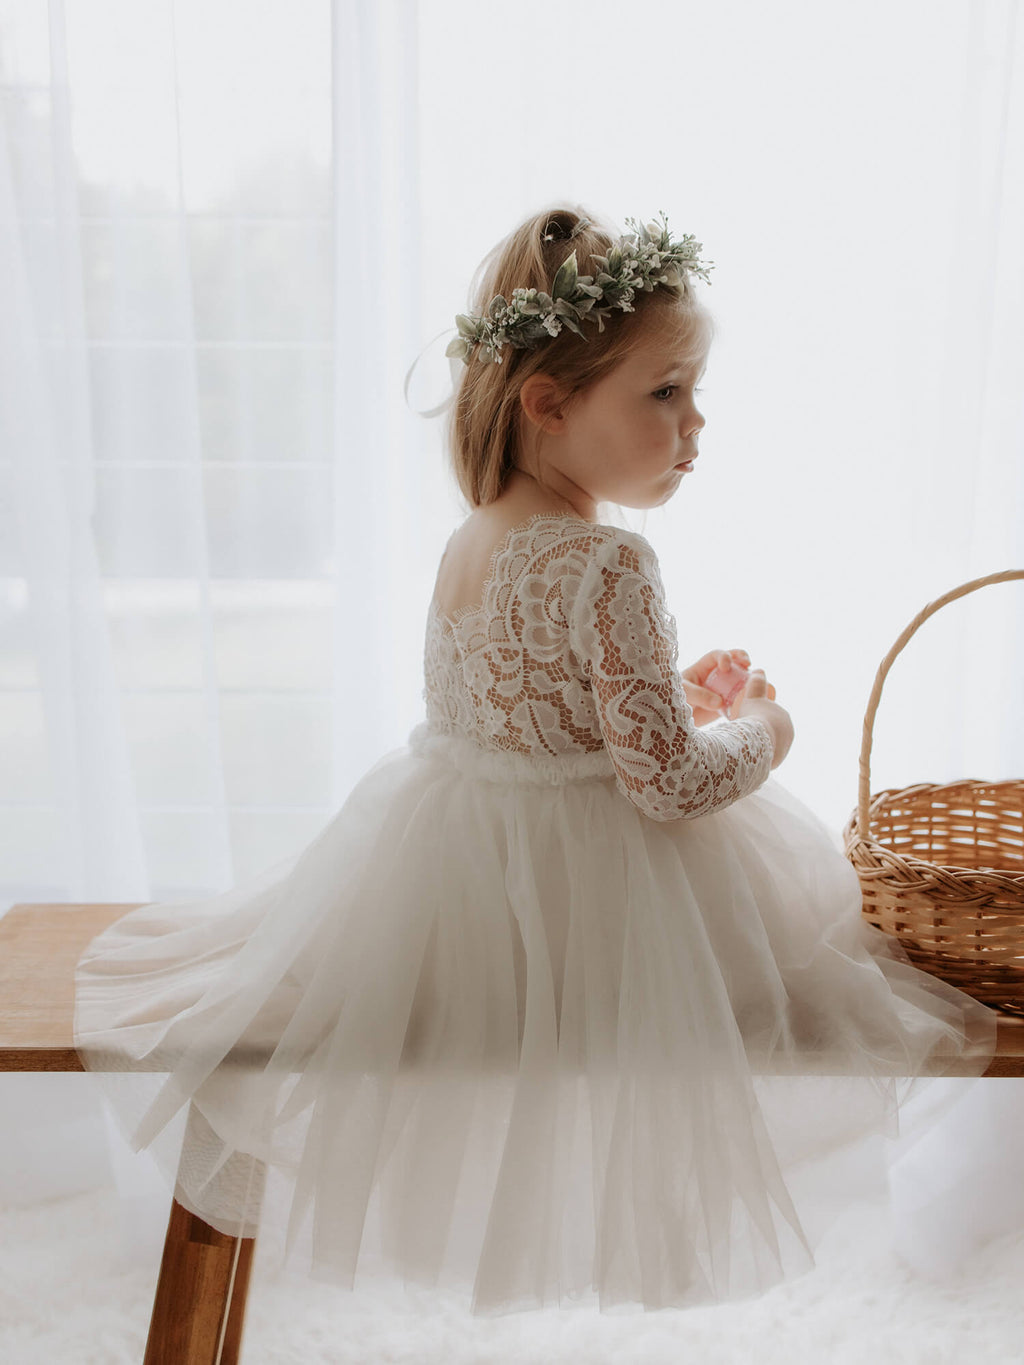 Belle tea length flower girl dress in ivory is worn by a toddler.